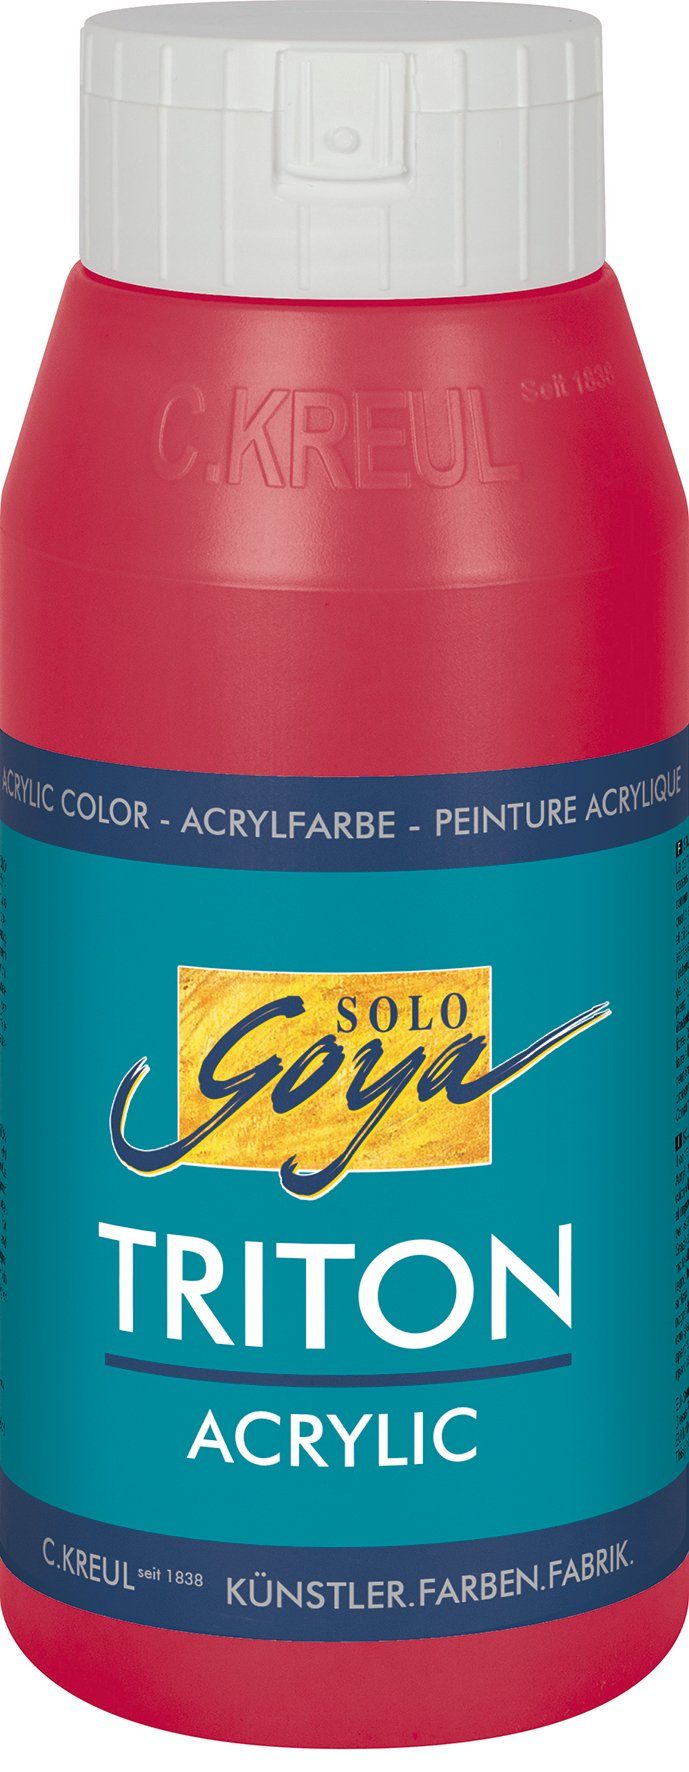 Kreul Acrylfarbe Solo Goya Triton Acrylic, 750 ml Magenta